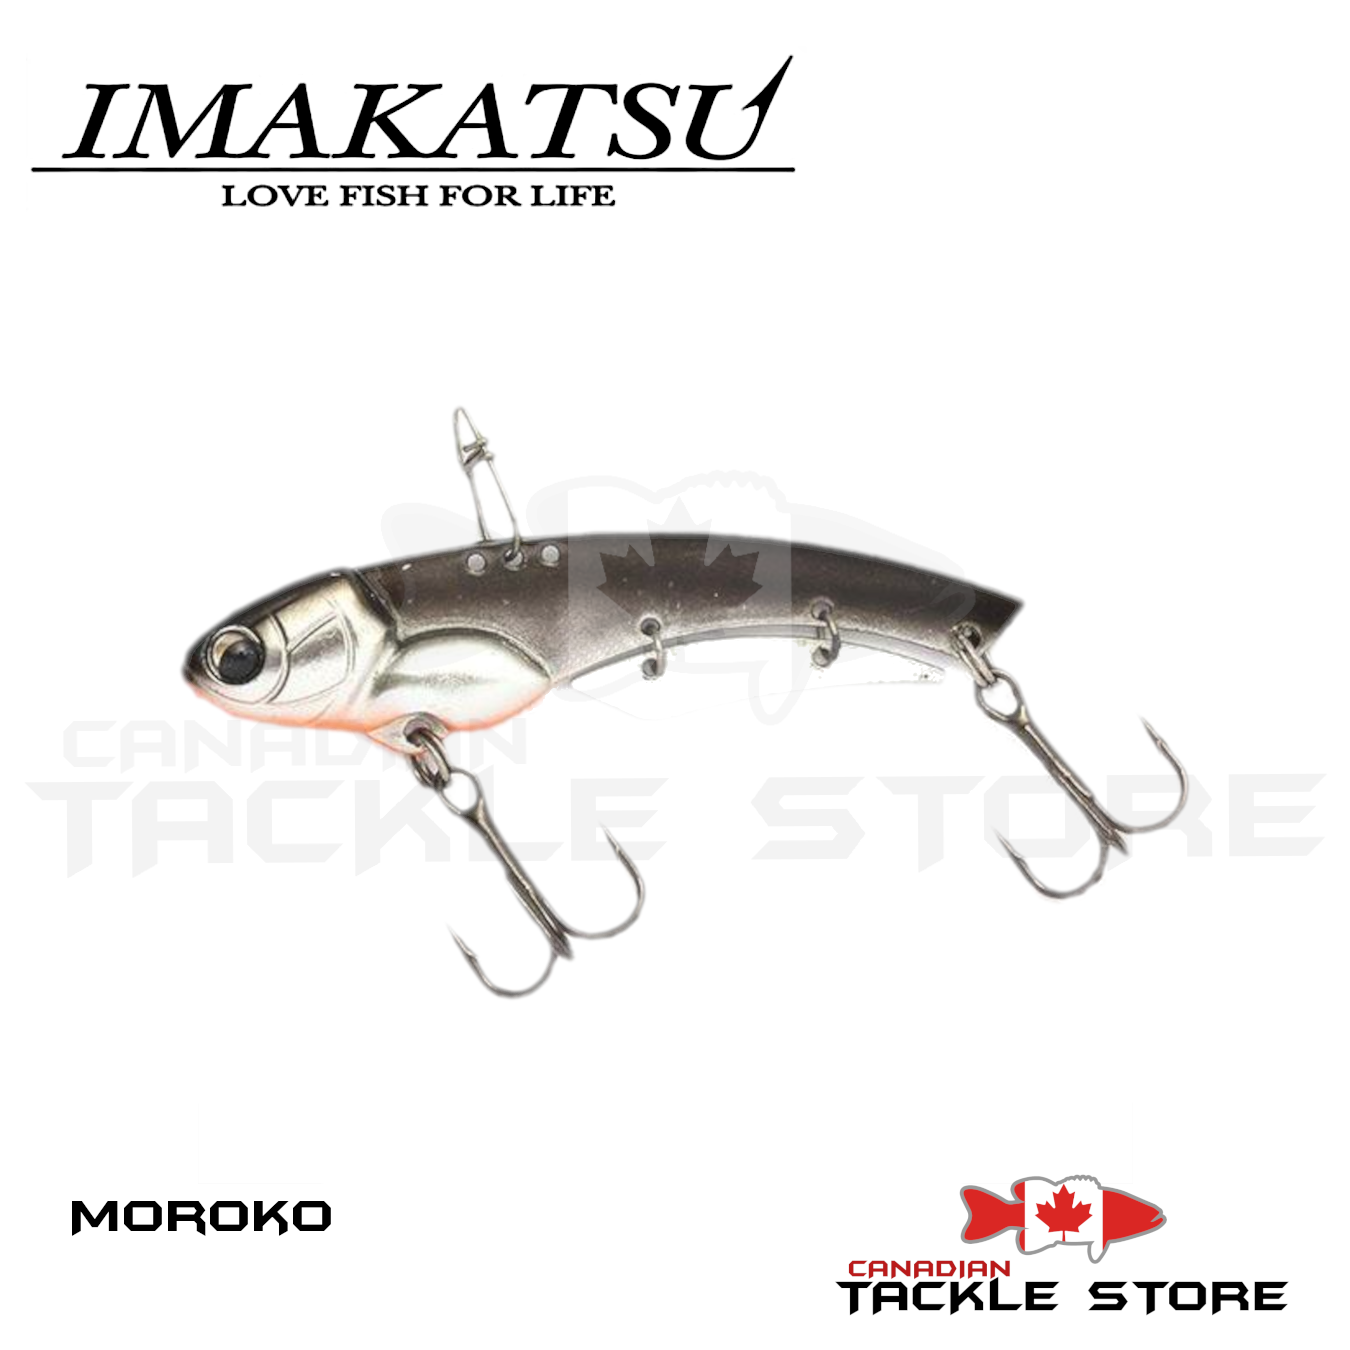 Imakatsu Replicator Swimbait – Canadian Tackle Store